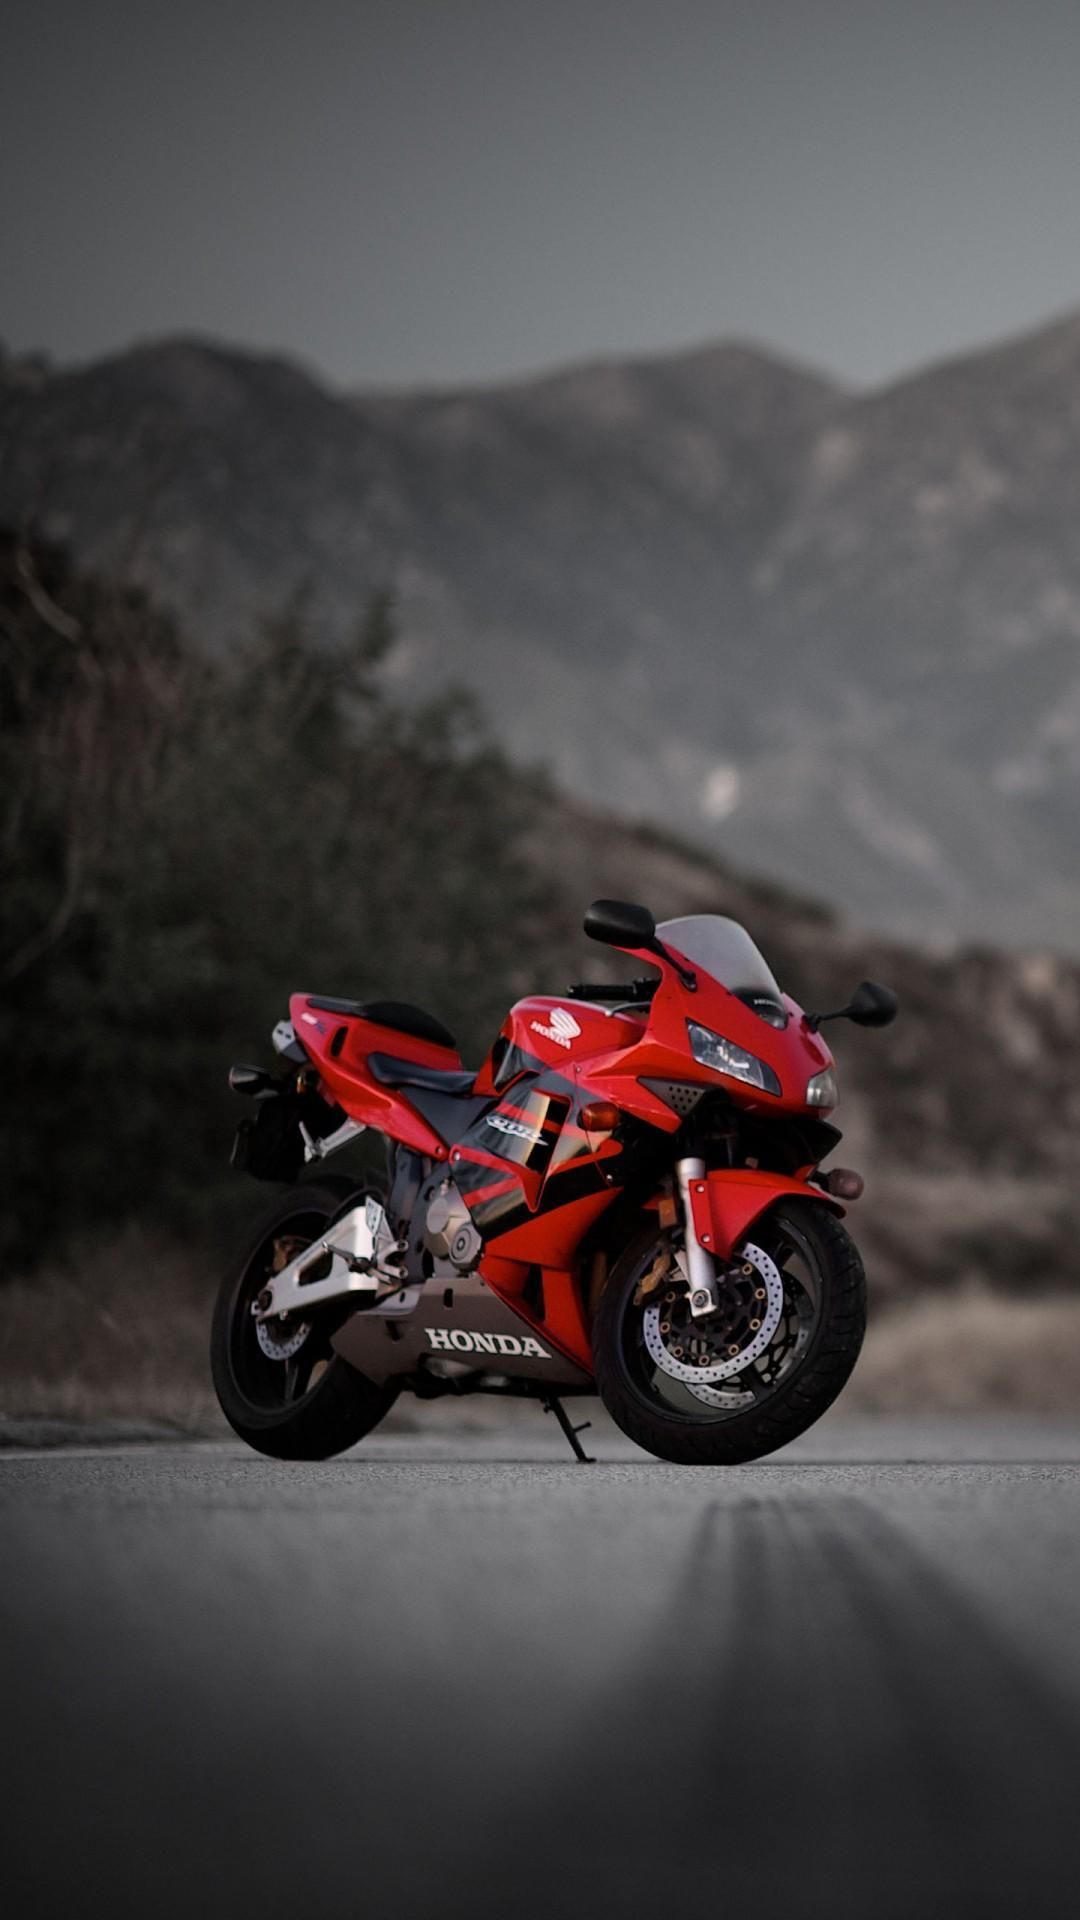 Honda Cbr600rr Red Sport Motorcycle Wallpaper. Motos esportivas